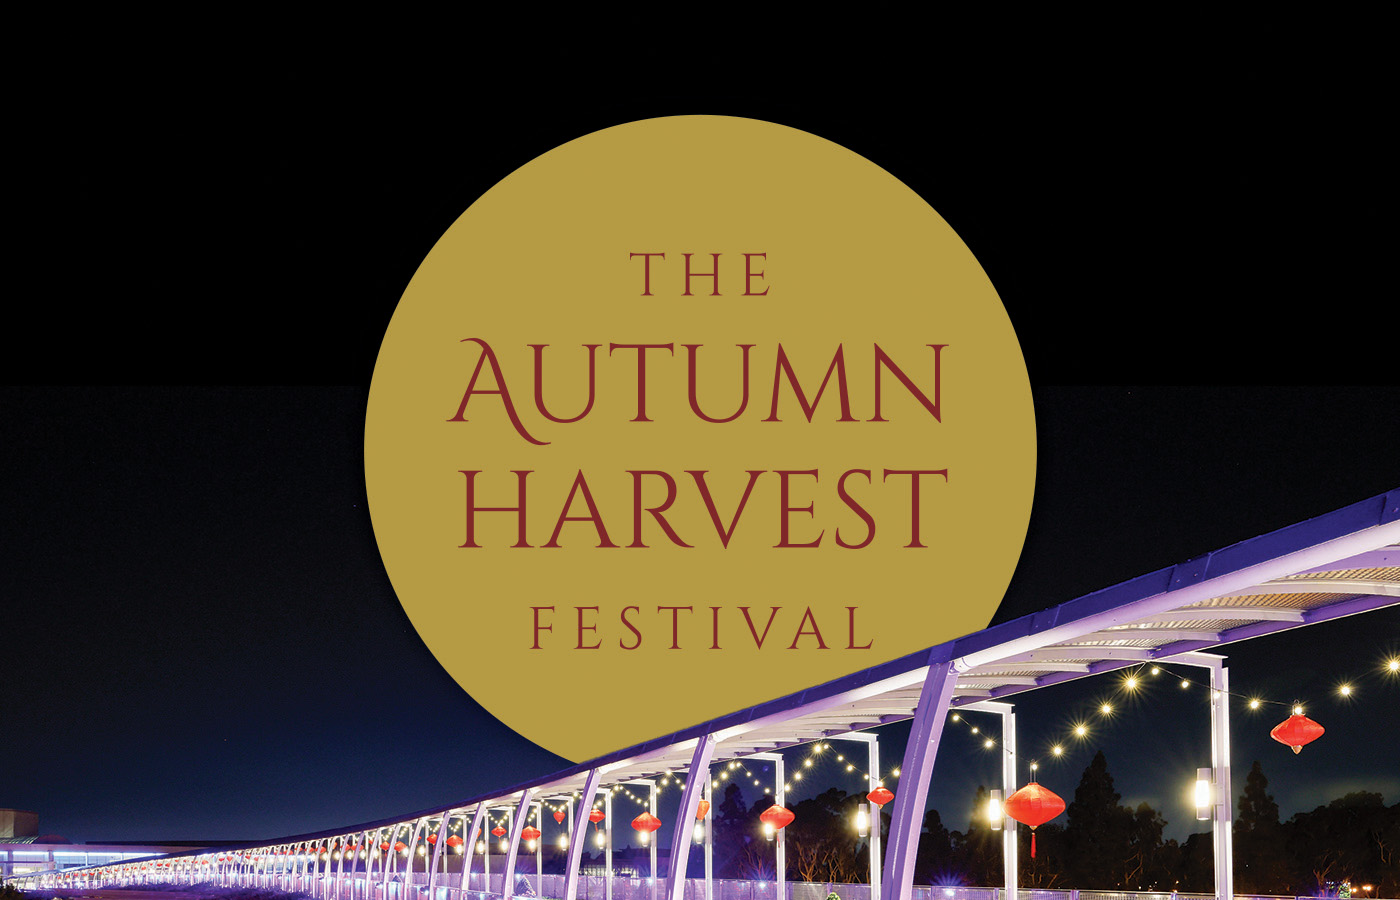 The Autumn Harvest Festival